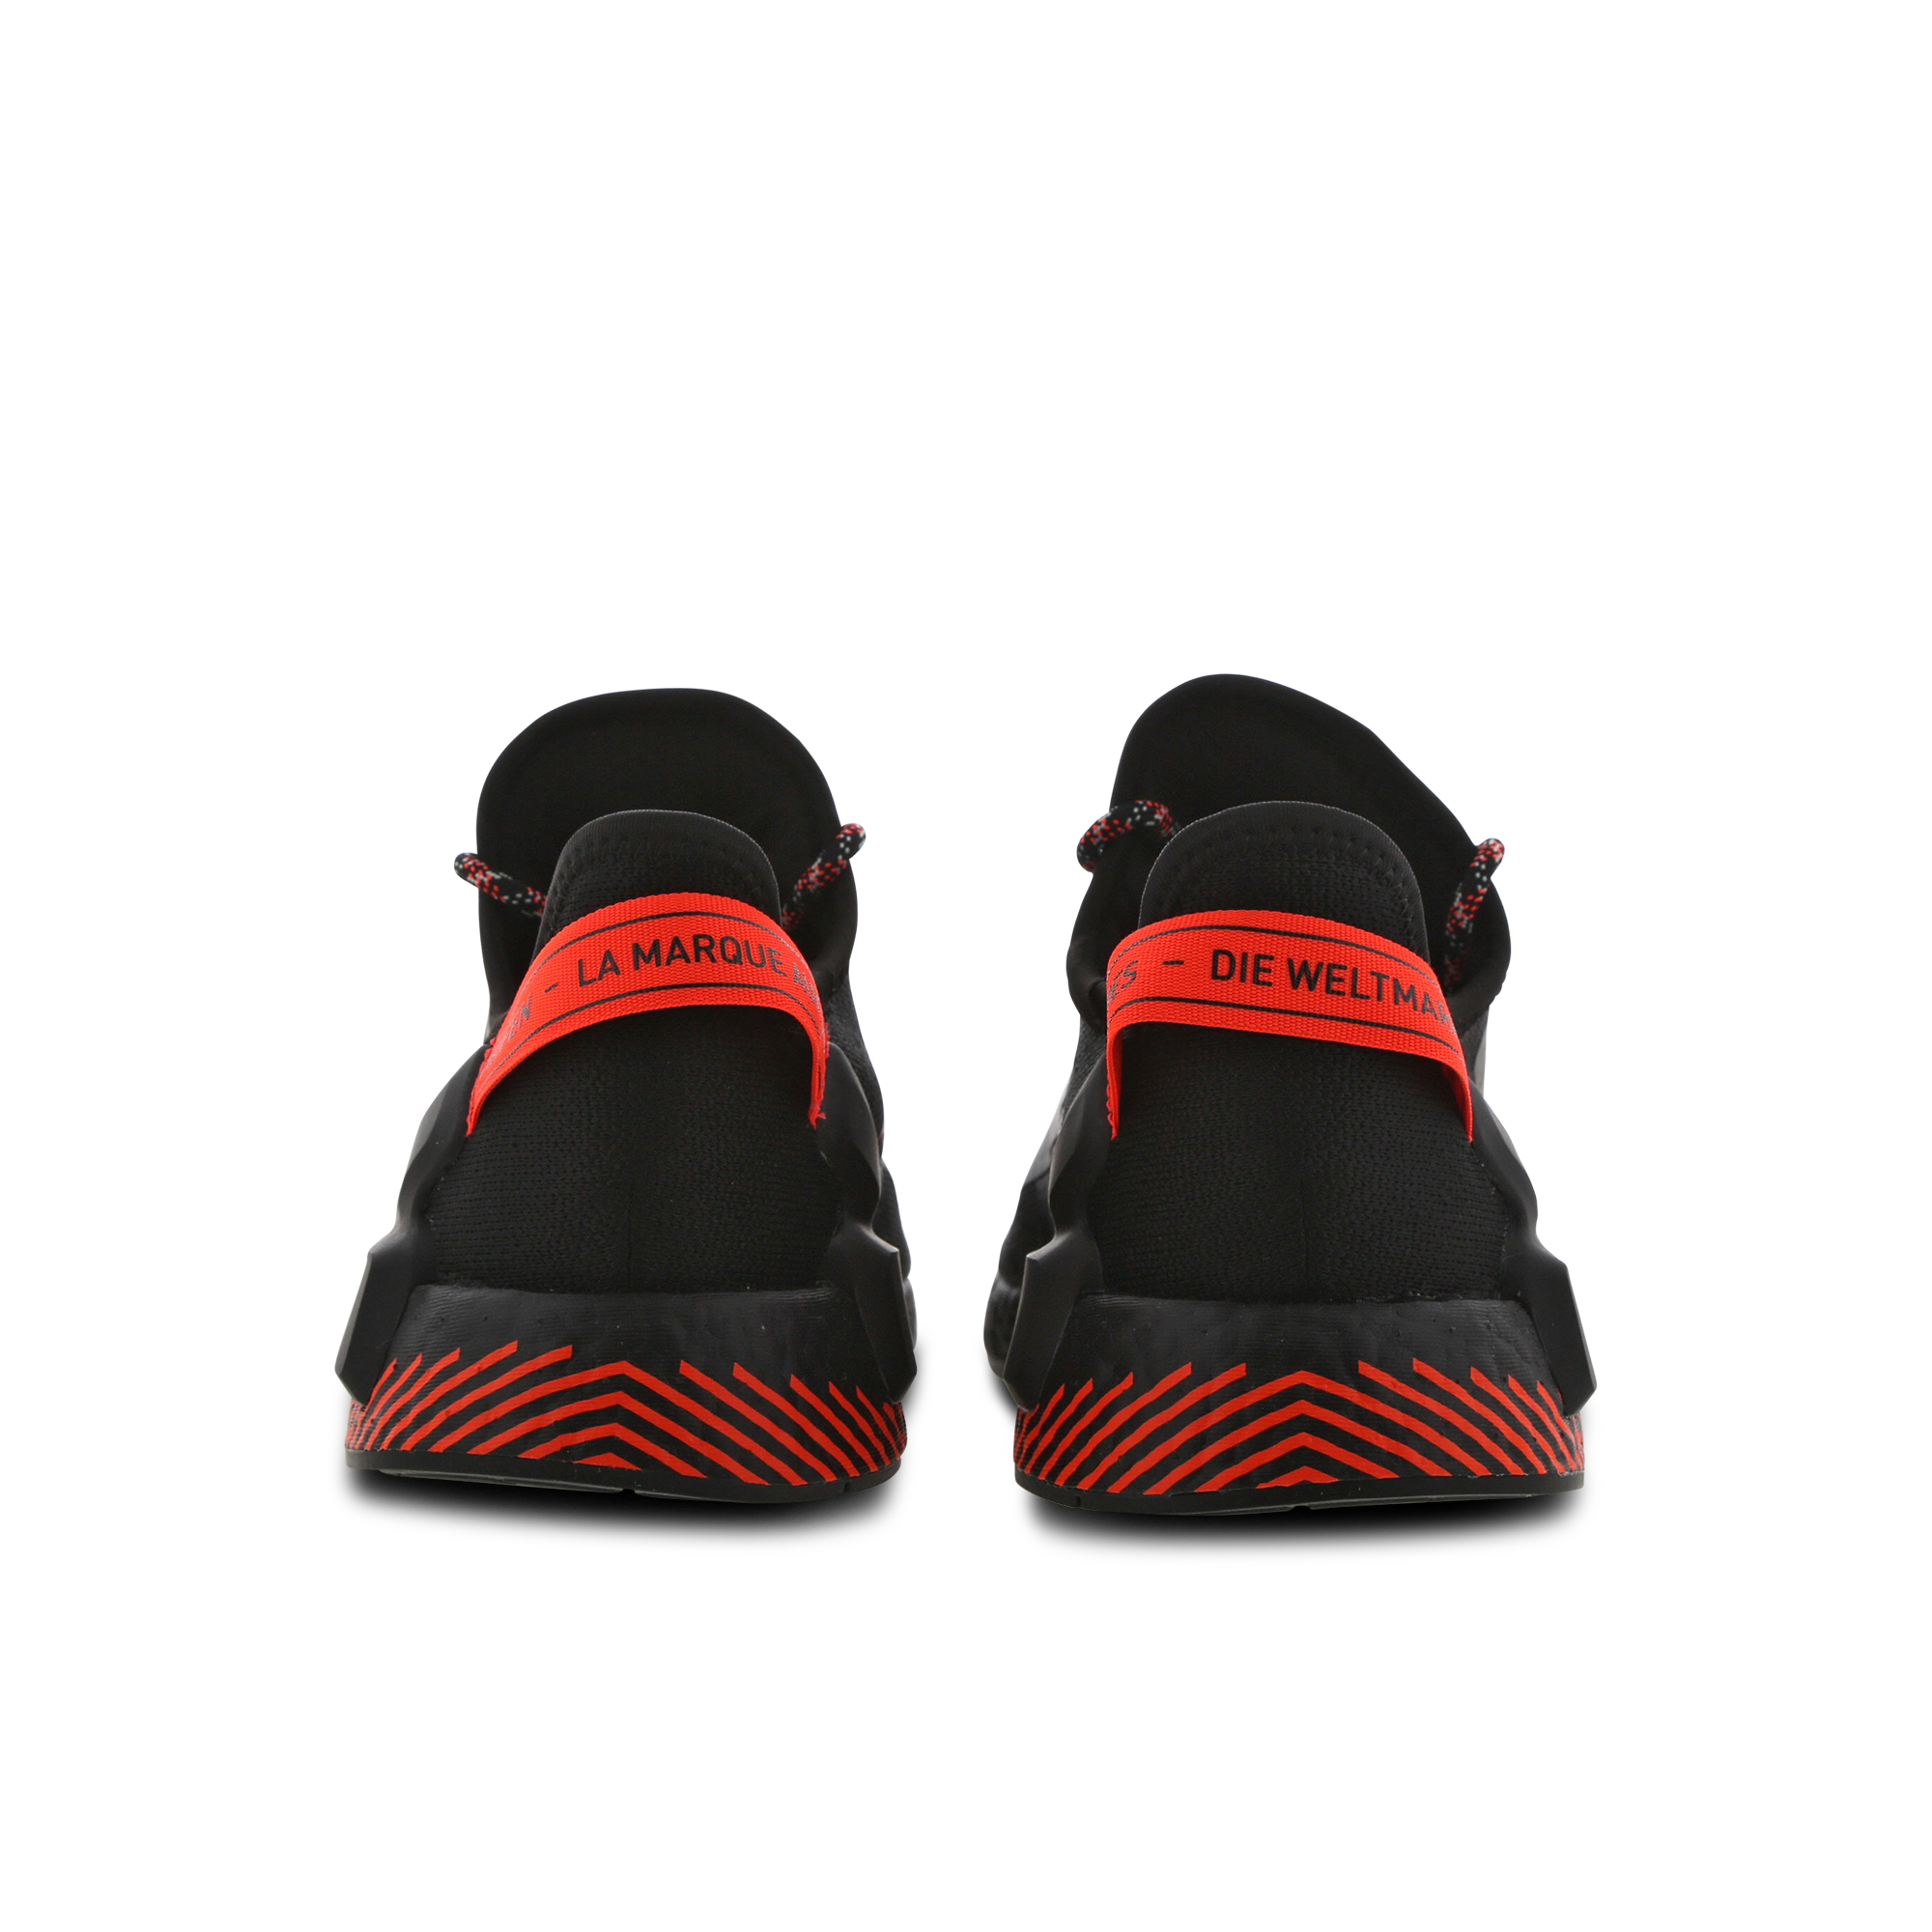 Adidas NMD R1 NYC Black Camo Boost Runner G28414